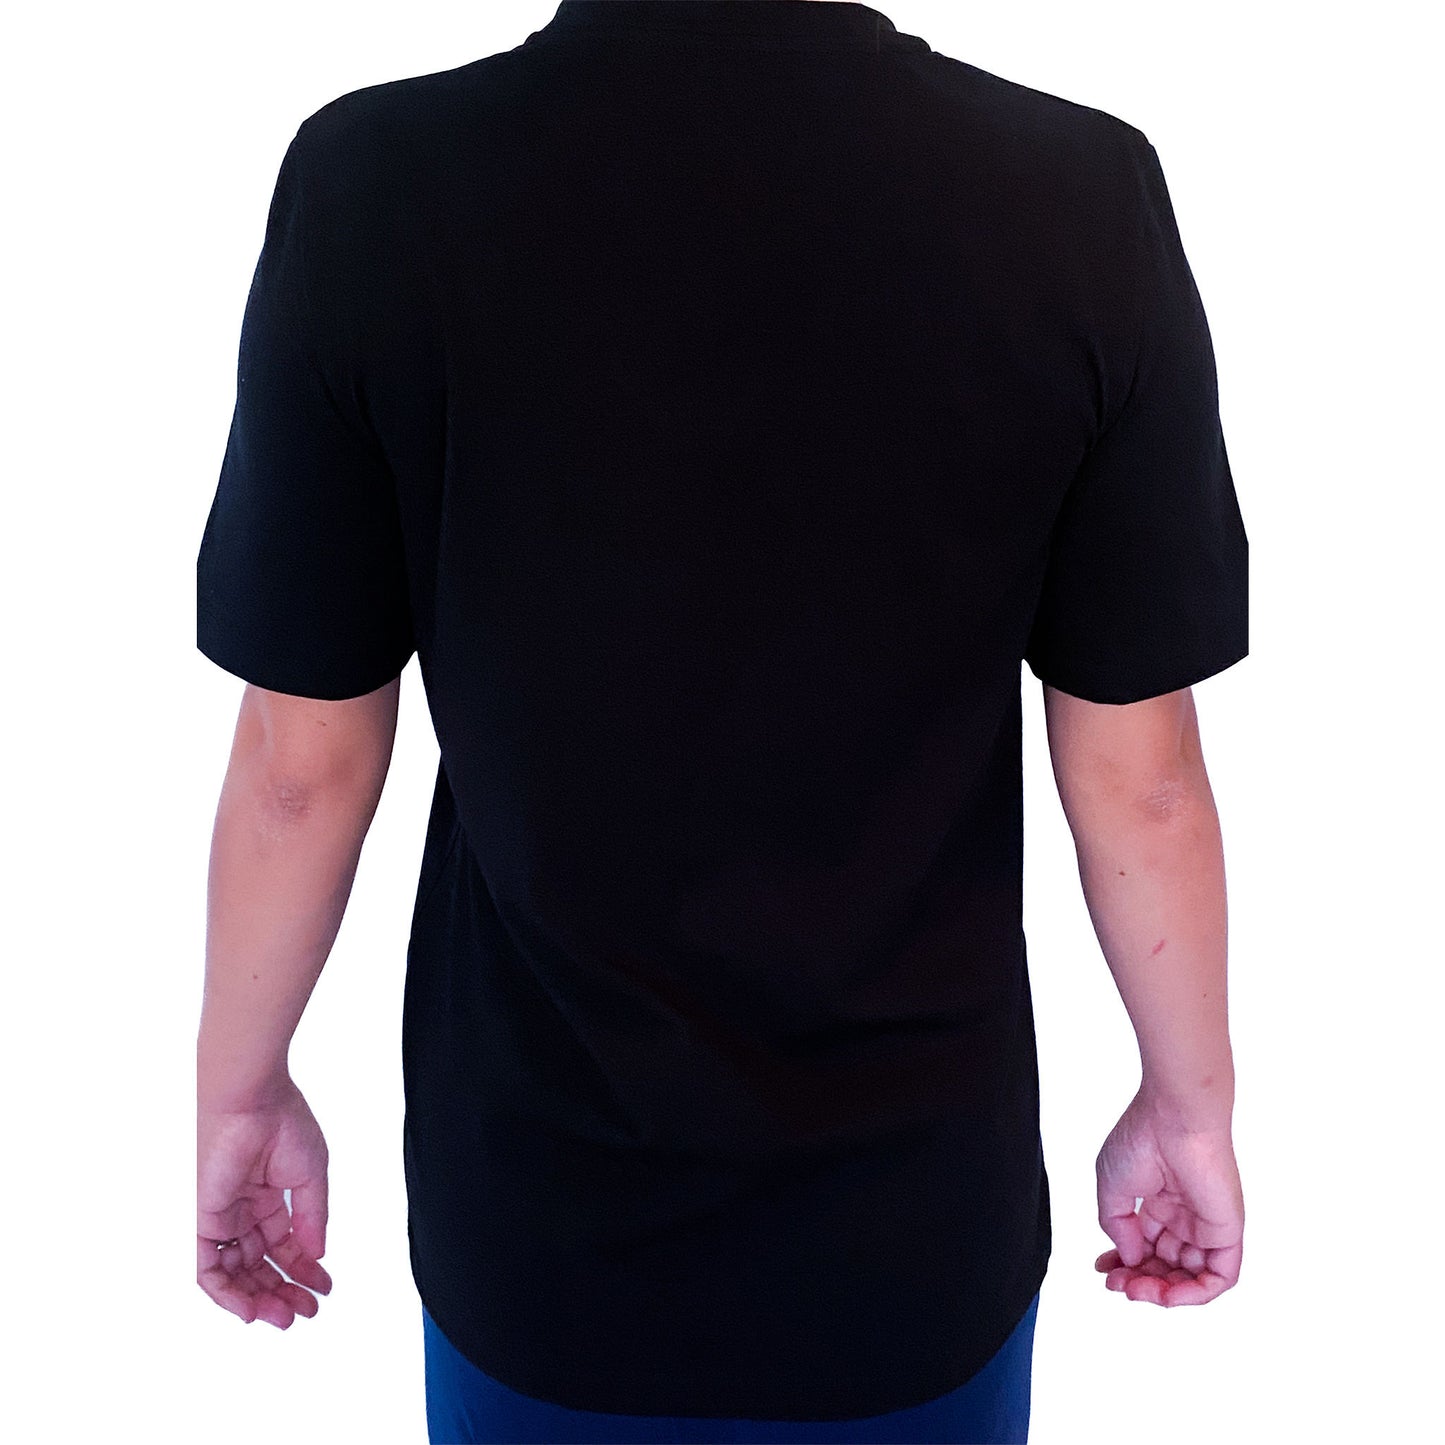 Ethical organic unisex t-shirt Black V neck Classic range